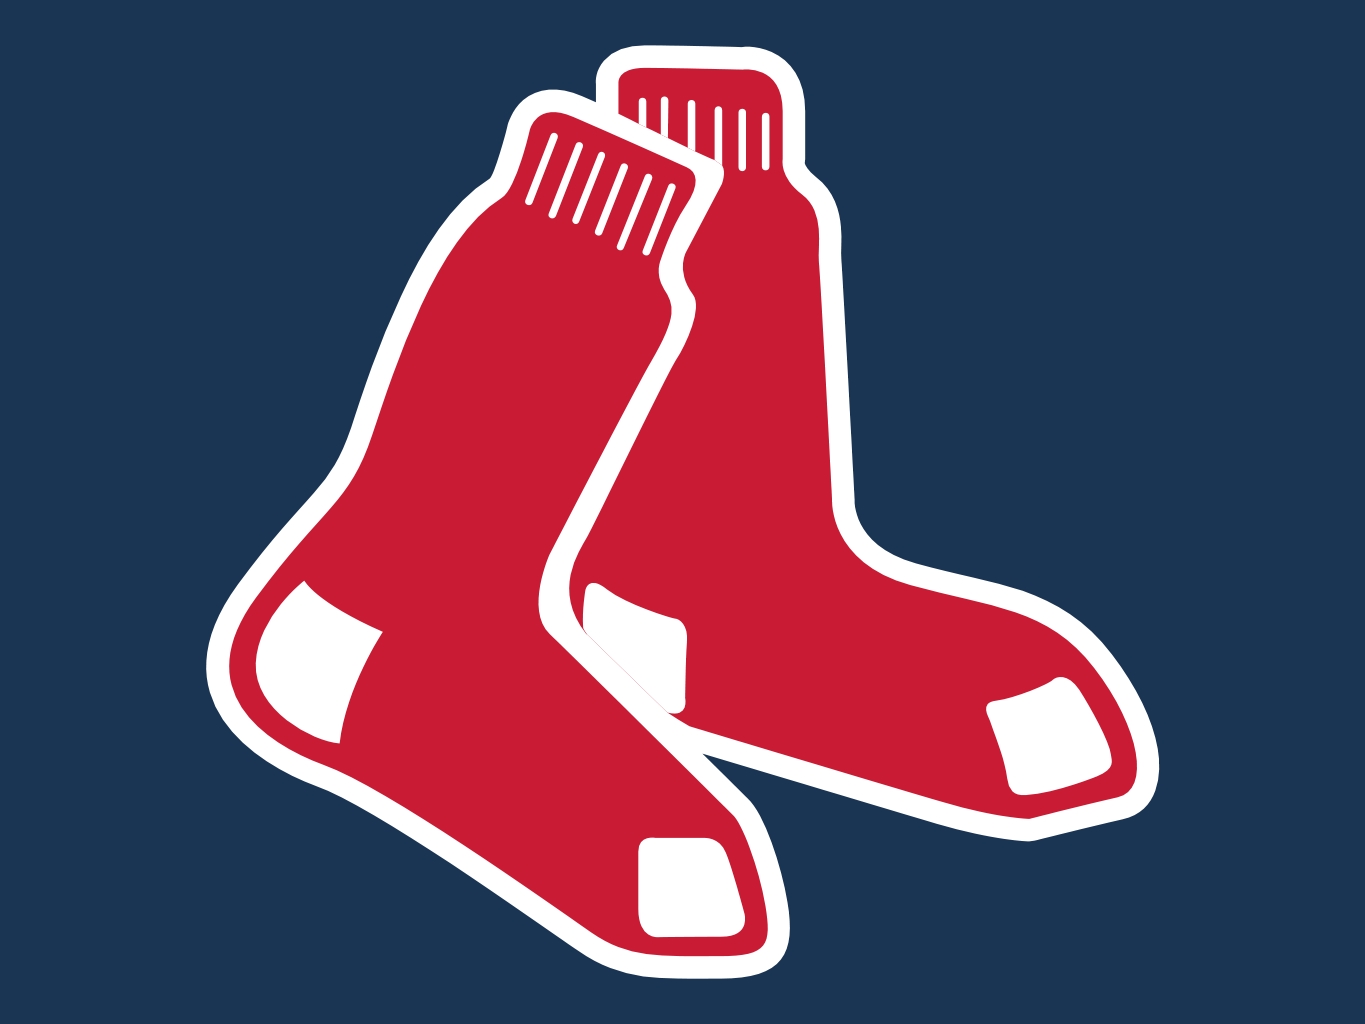 Red Sox Logo Jpg | Free Download Clip Art | Free Clip Art | on ...